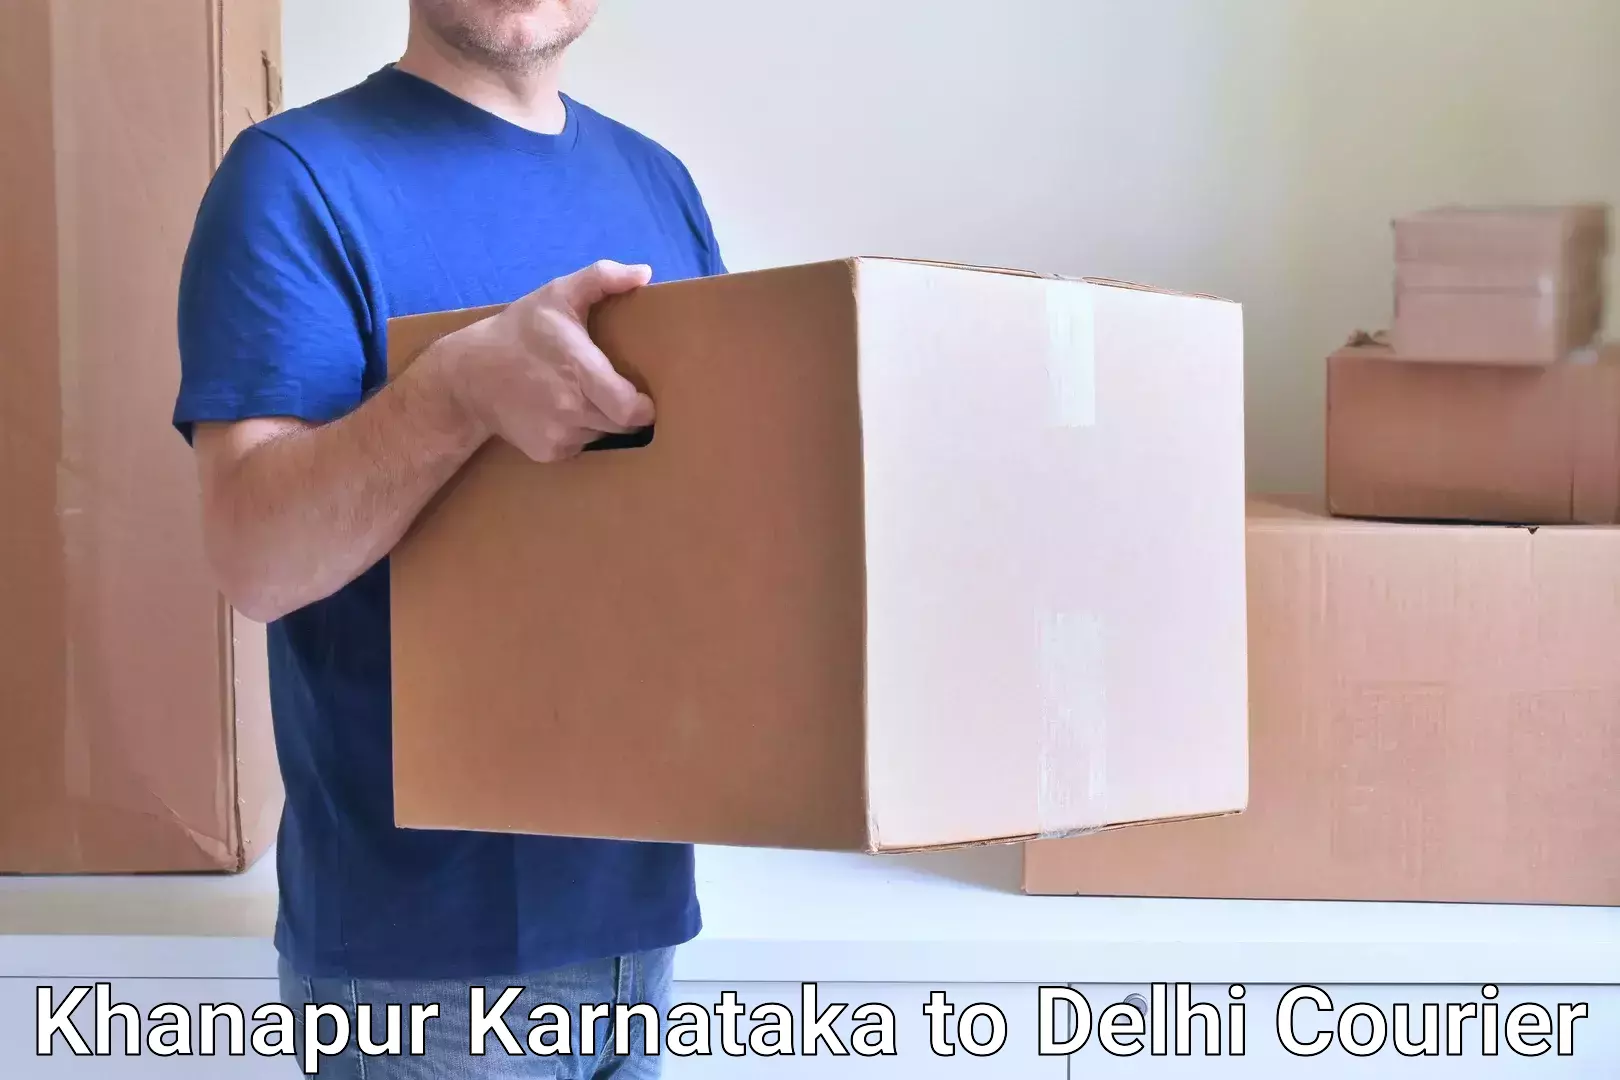 Secure package delivery Khanapur Karnataka to Delhi